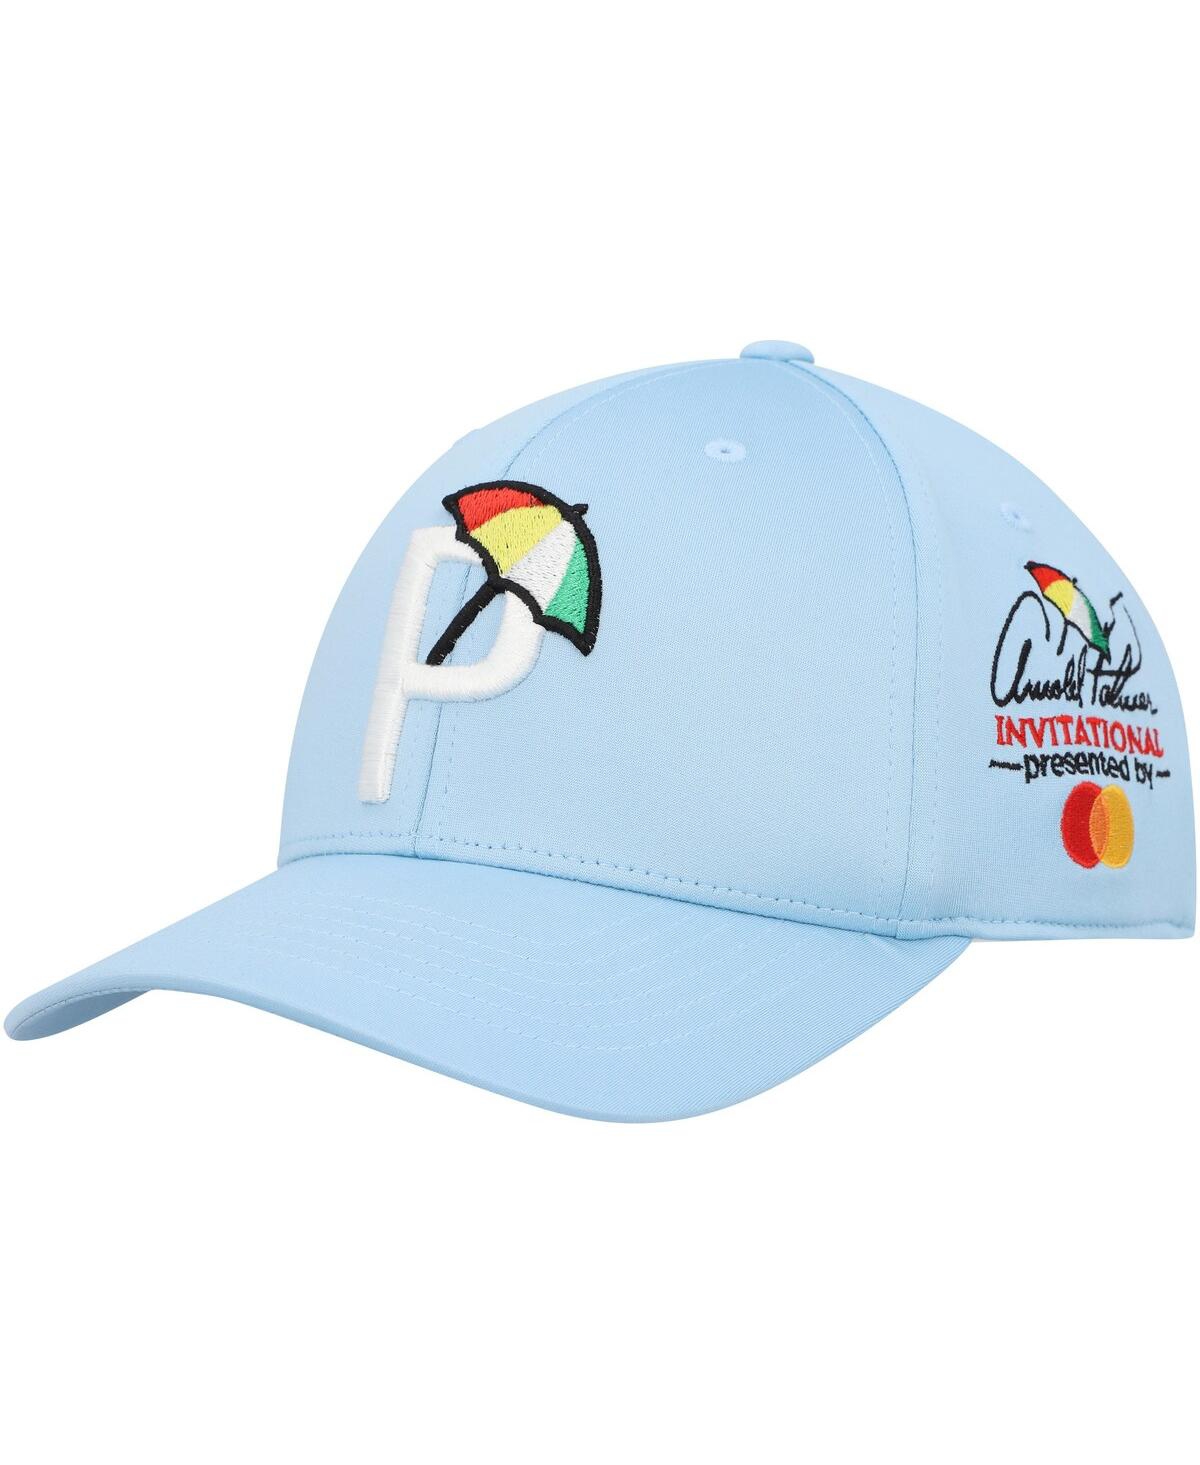 Men's Light Blue Arnold Palmer Snapback Hat - Blue